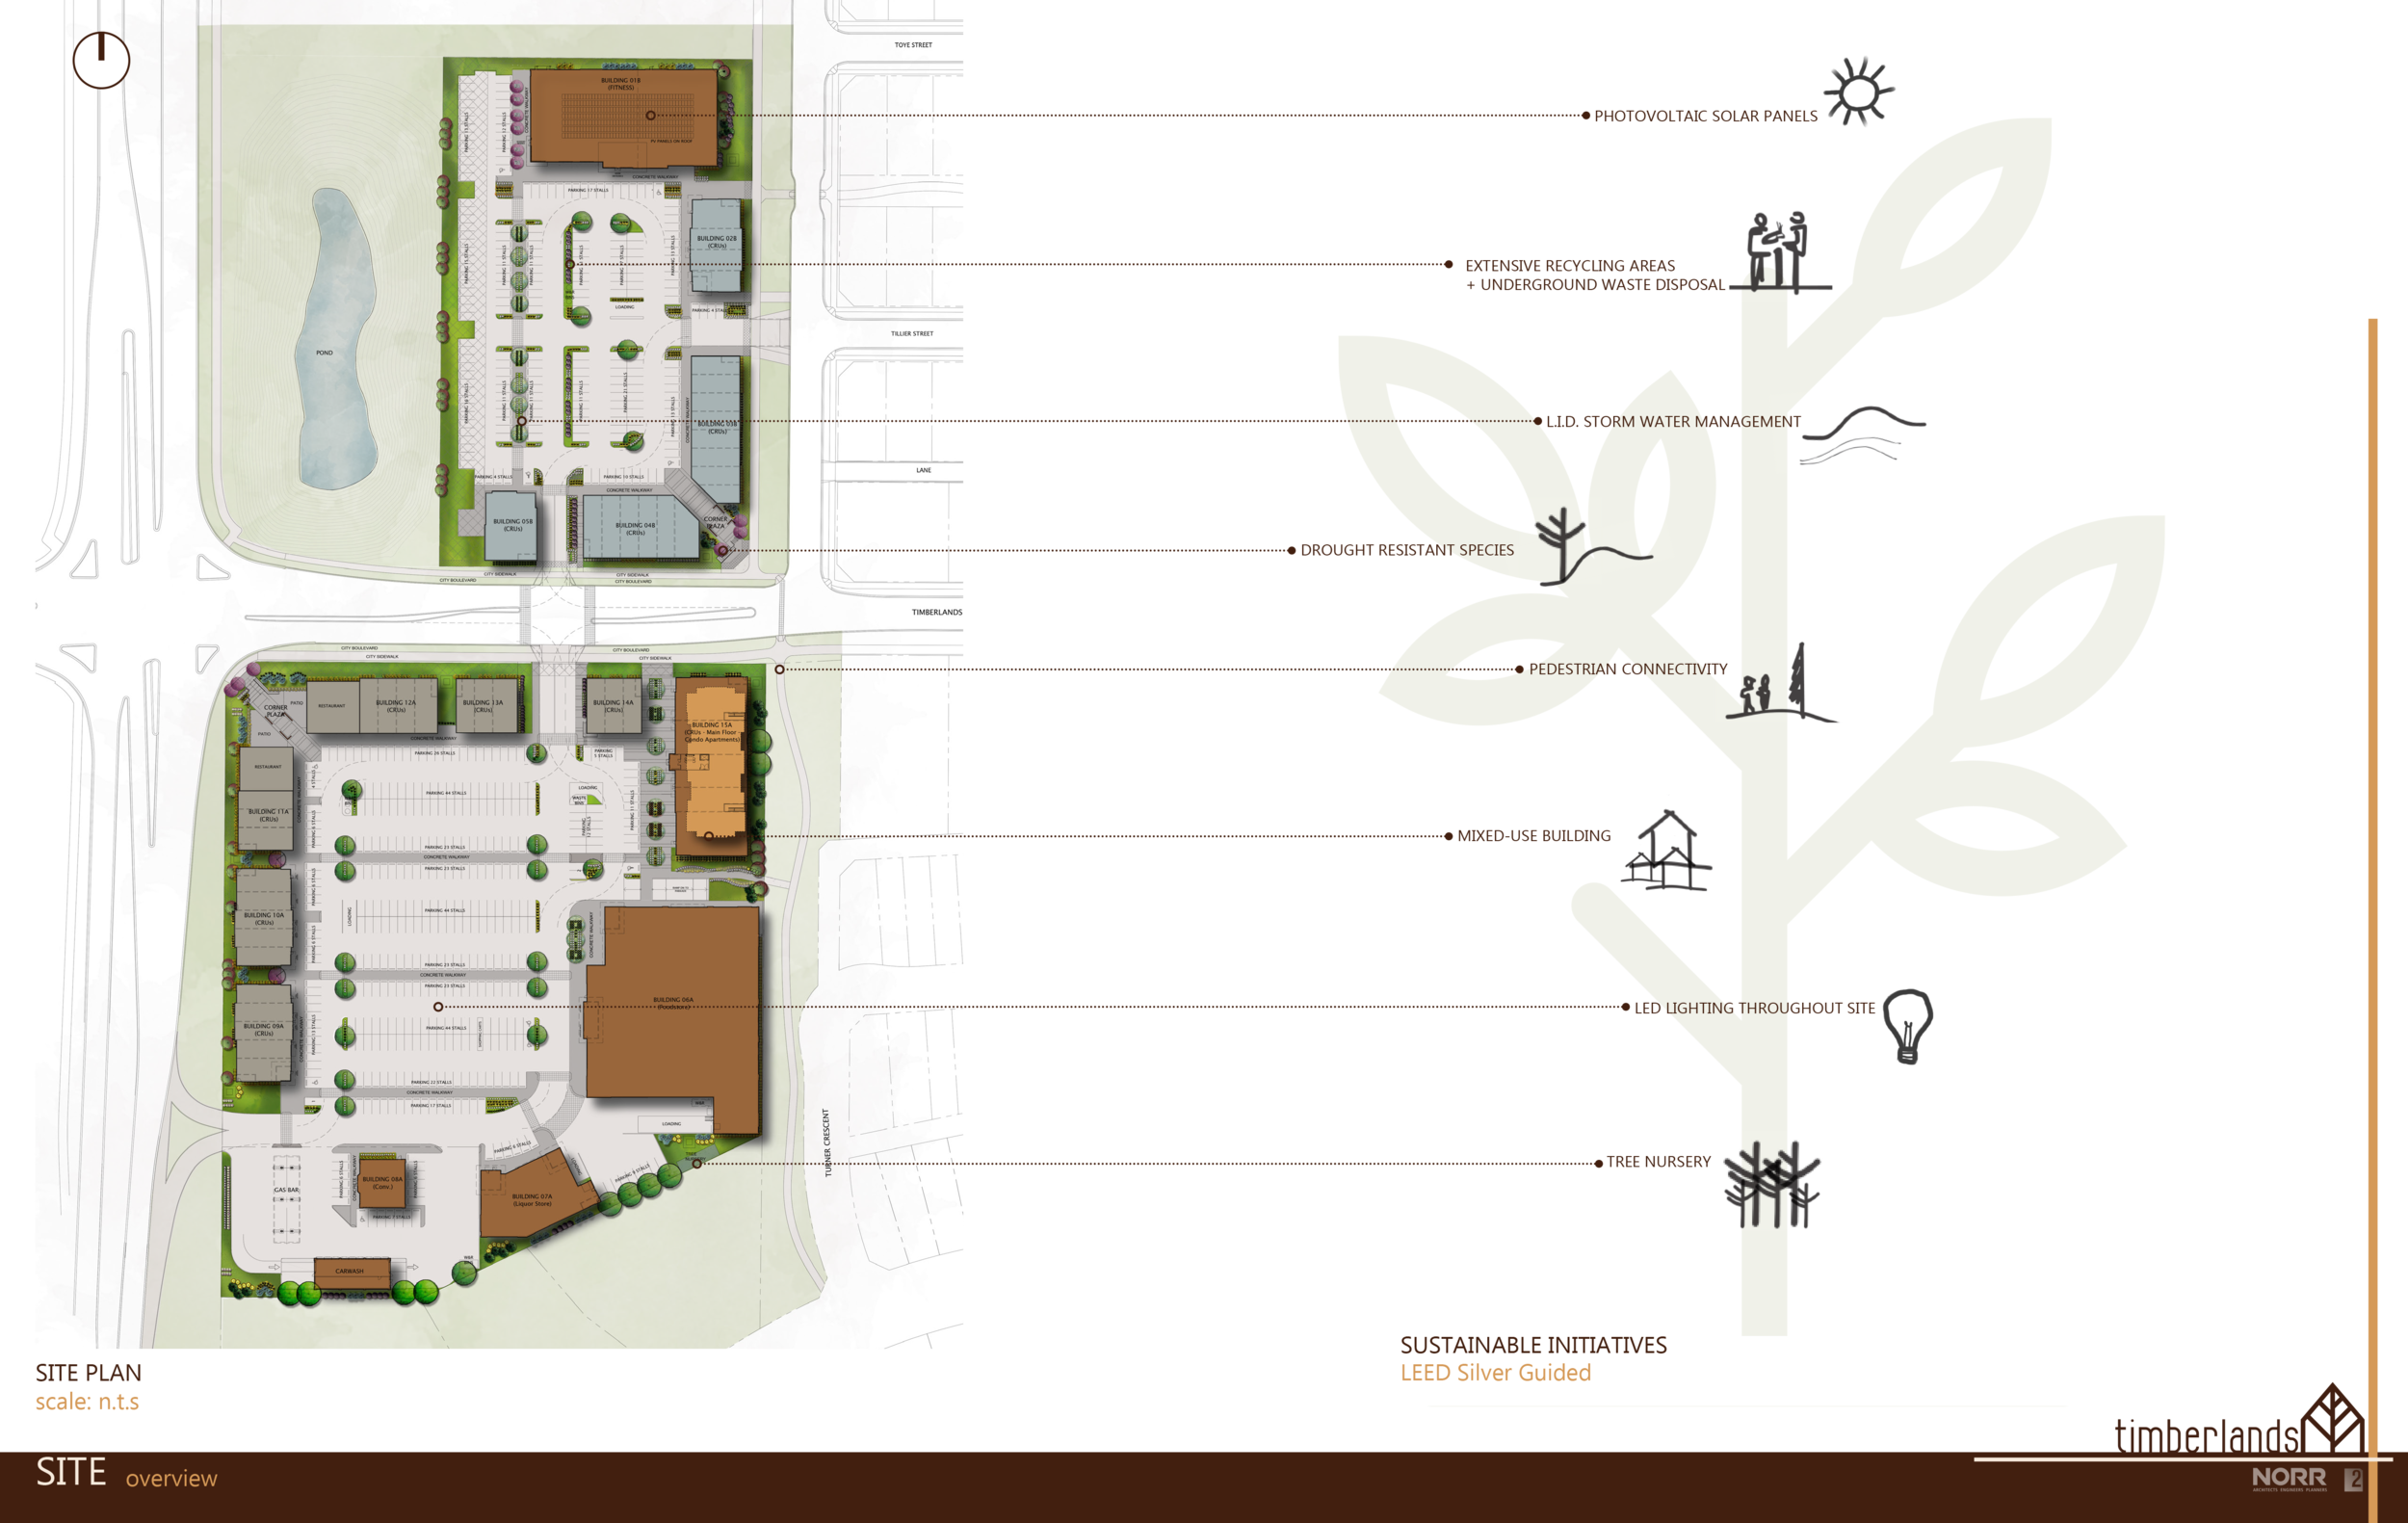 Timberlands Market Site Plan